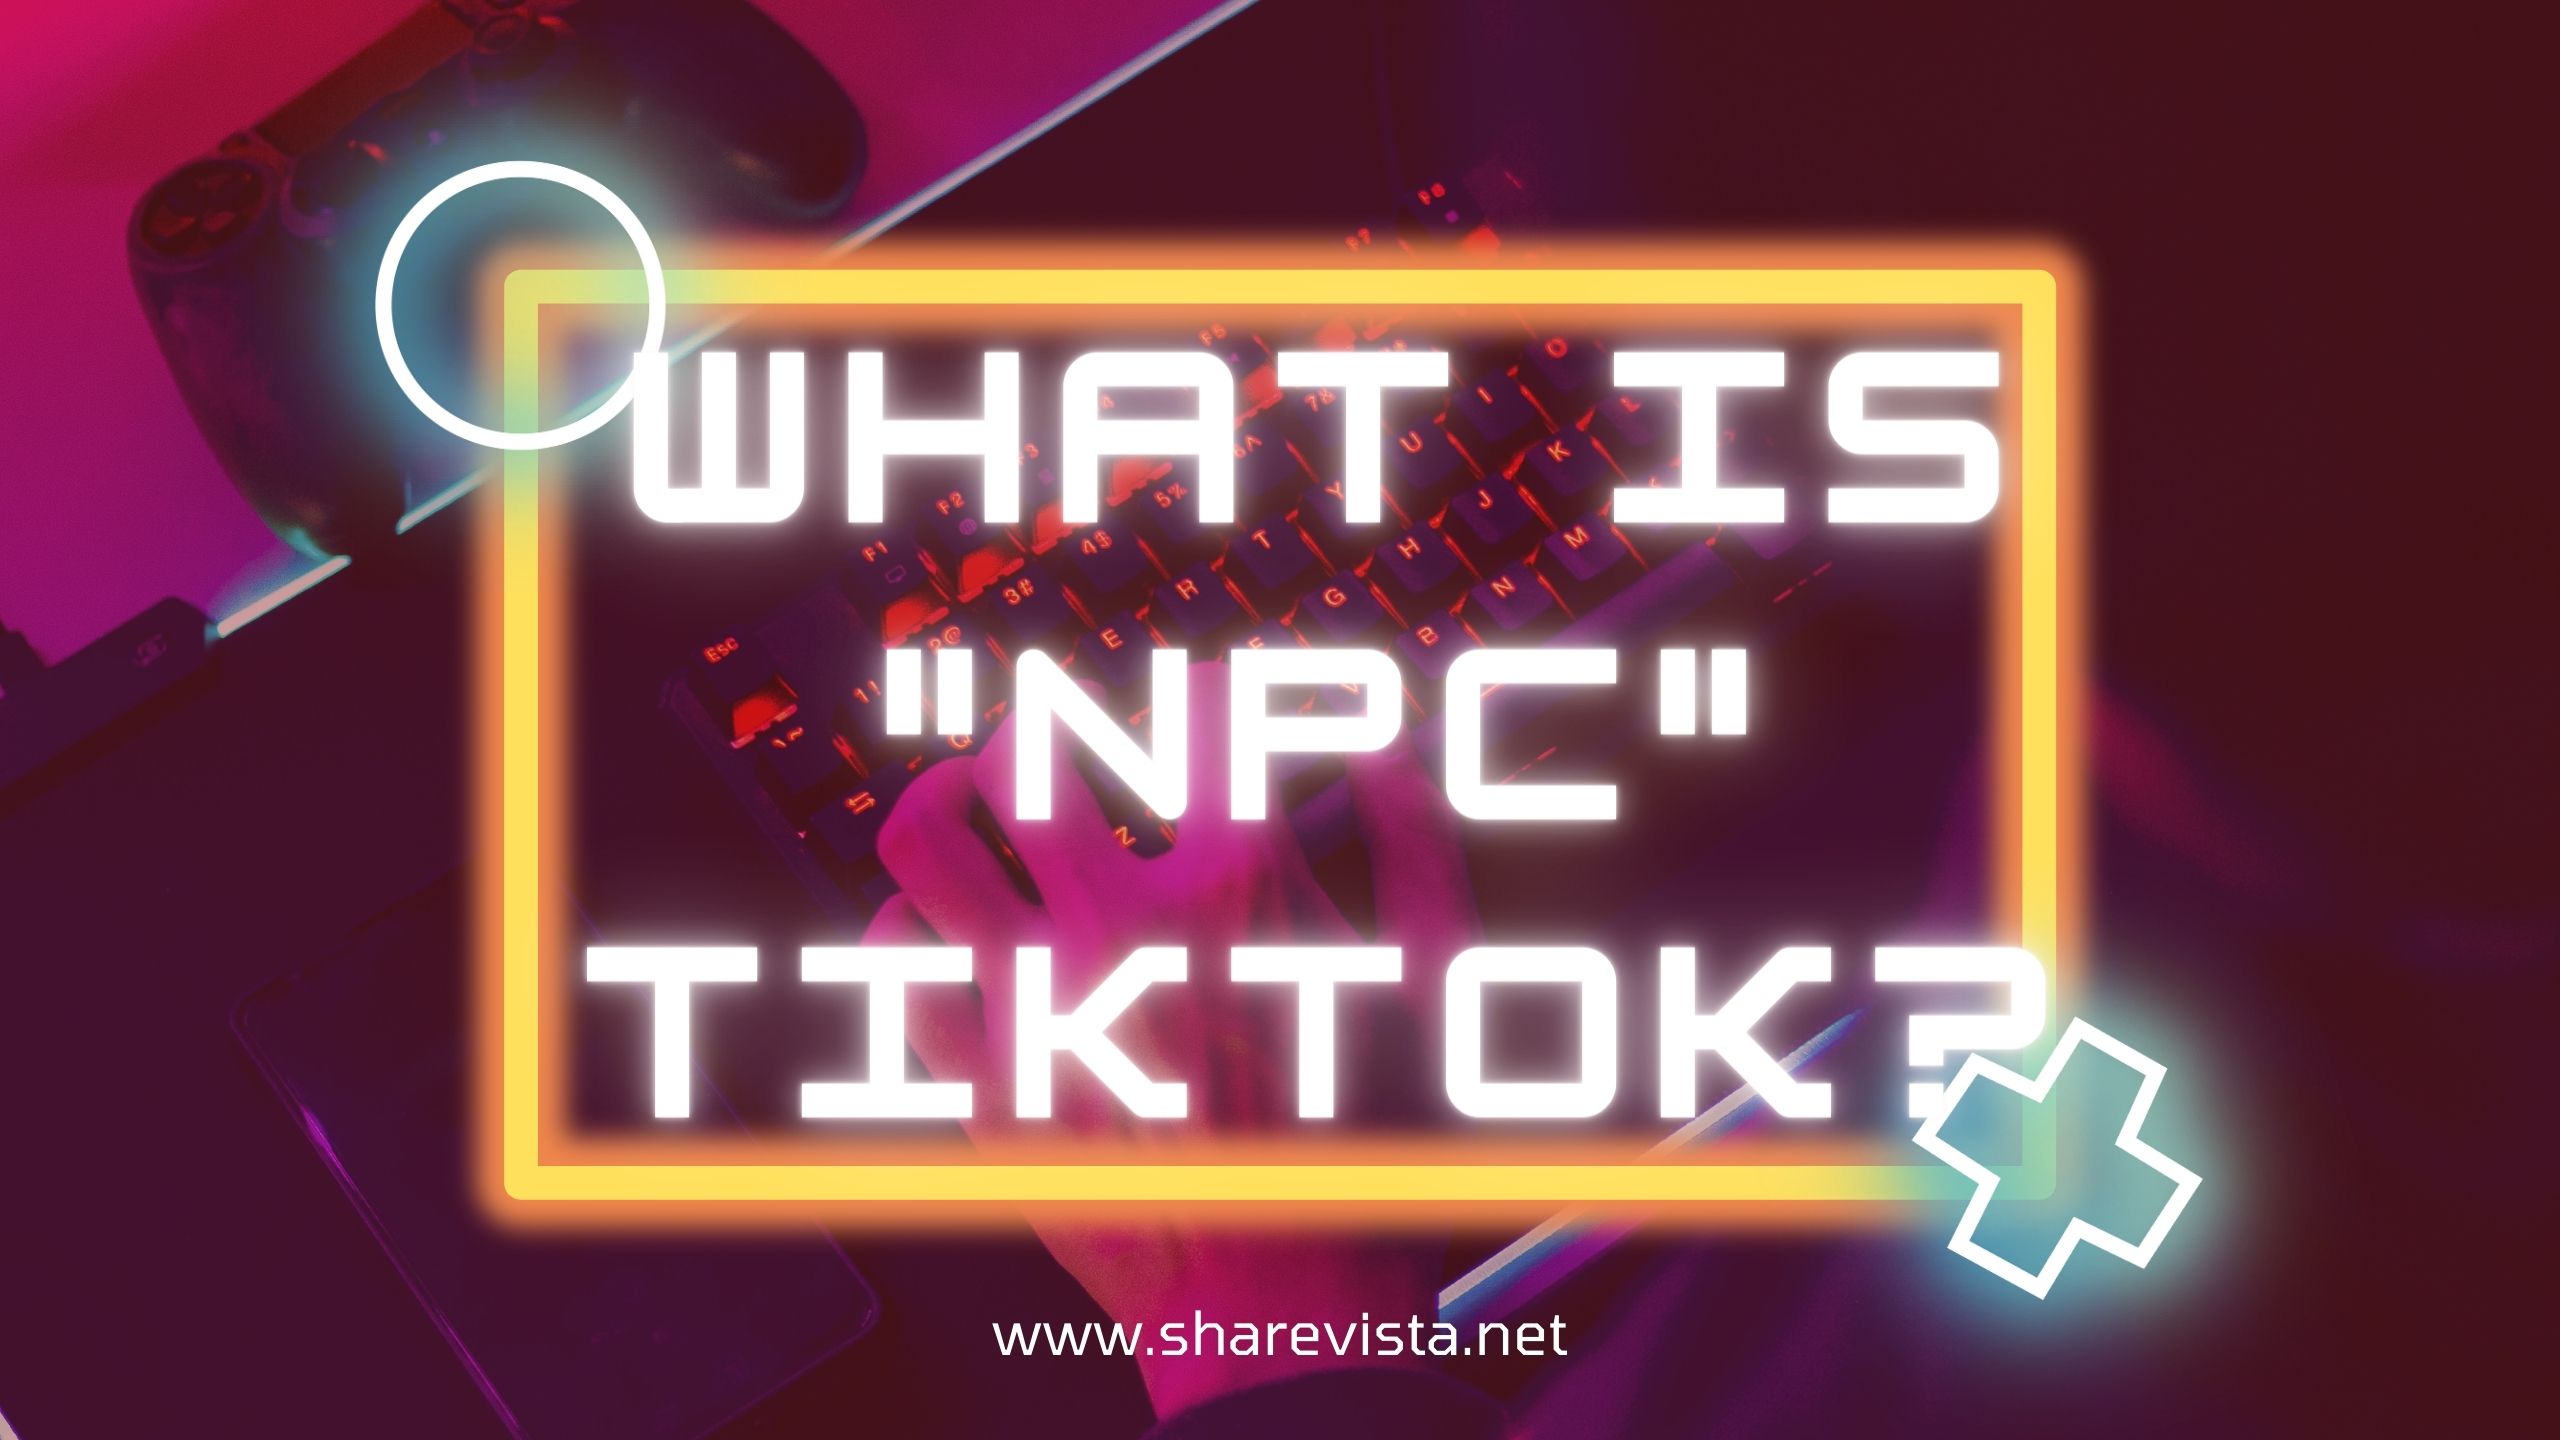 What is "NPC" TikTok?